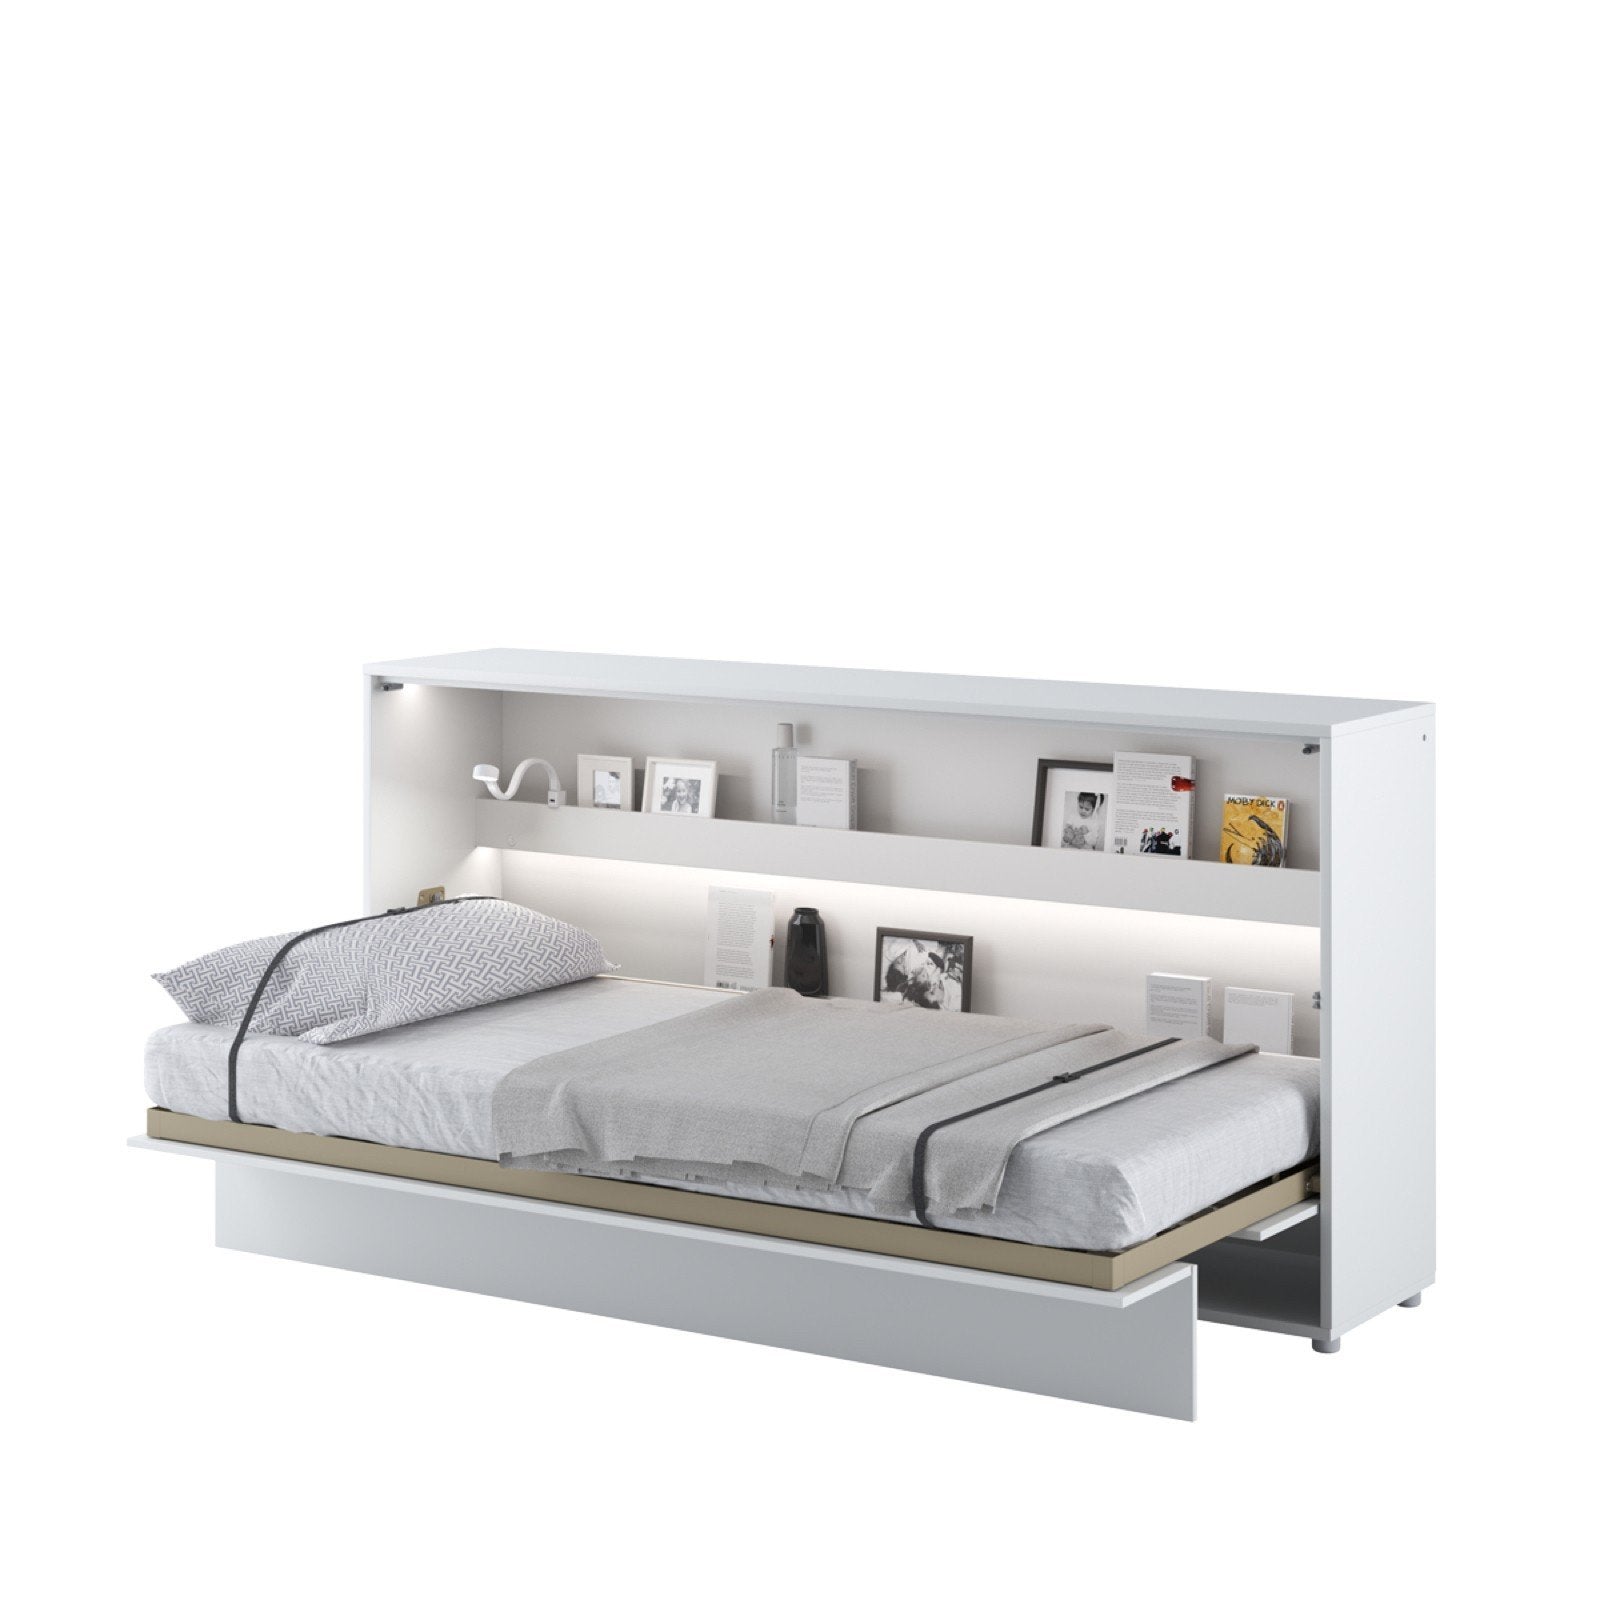 View BC06 Horizontal Wall Bed Concept 90cm Murphy Bed White Matt 90 x 200cm information